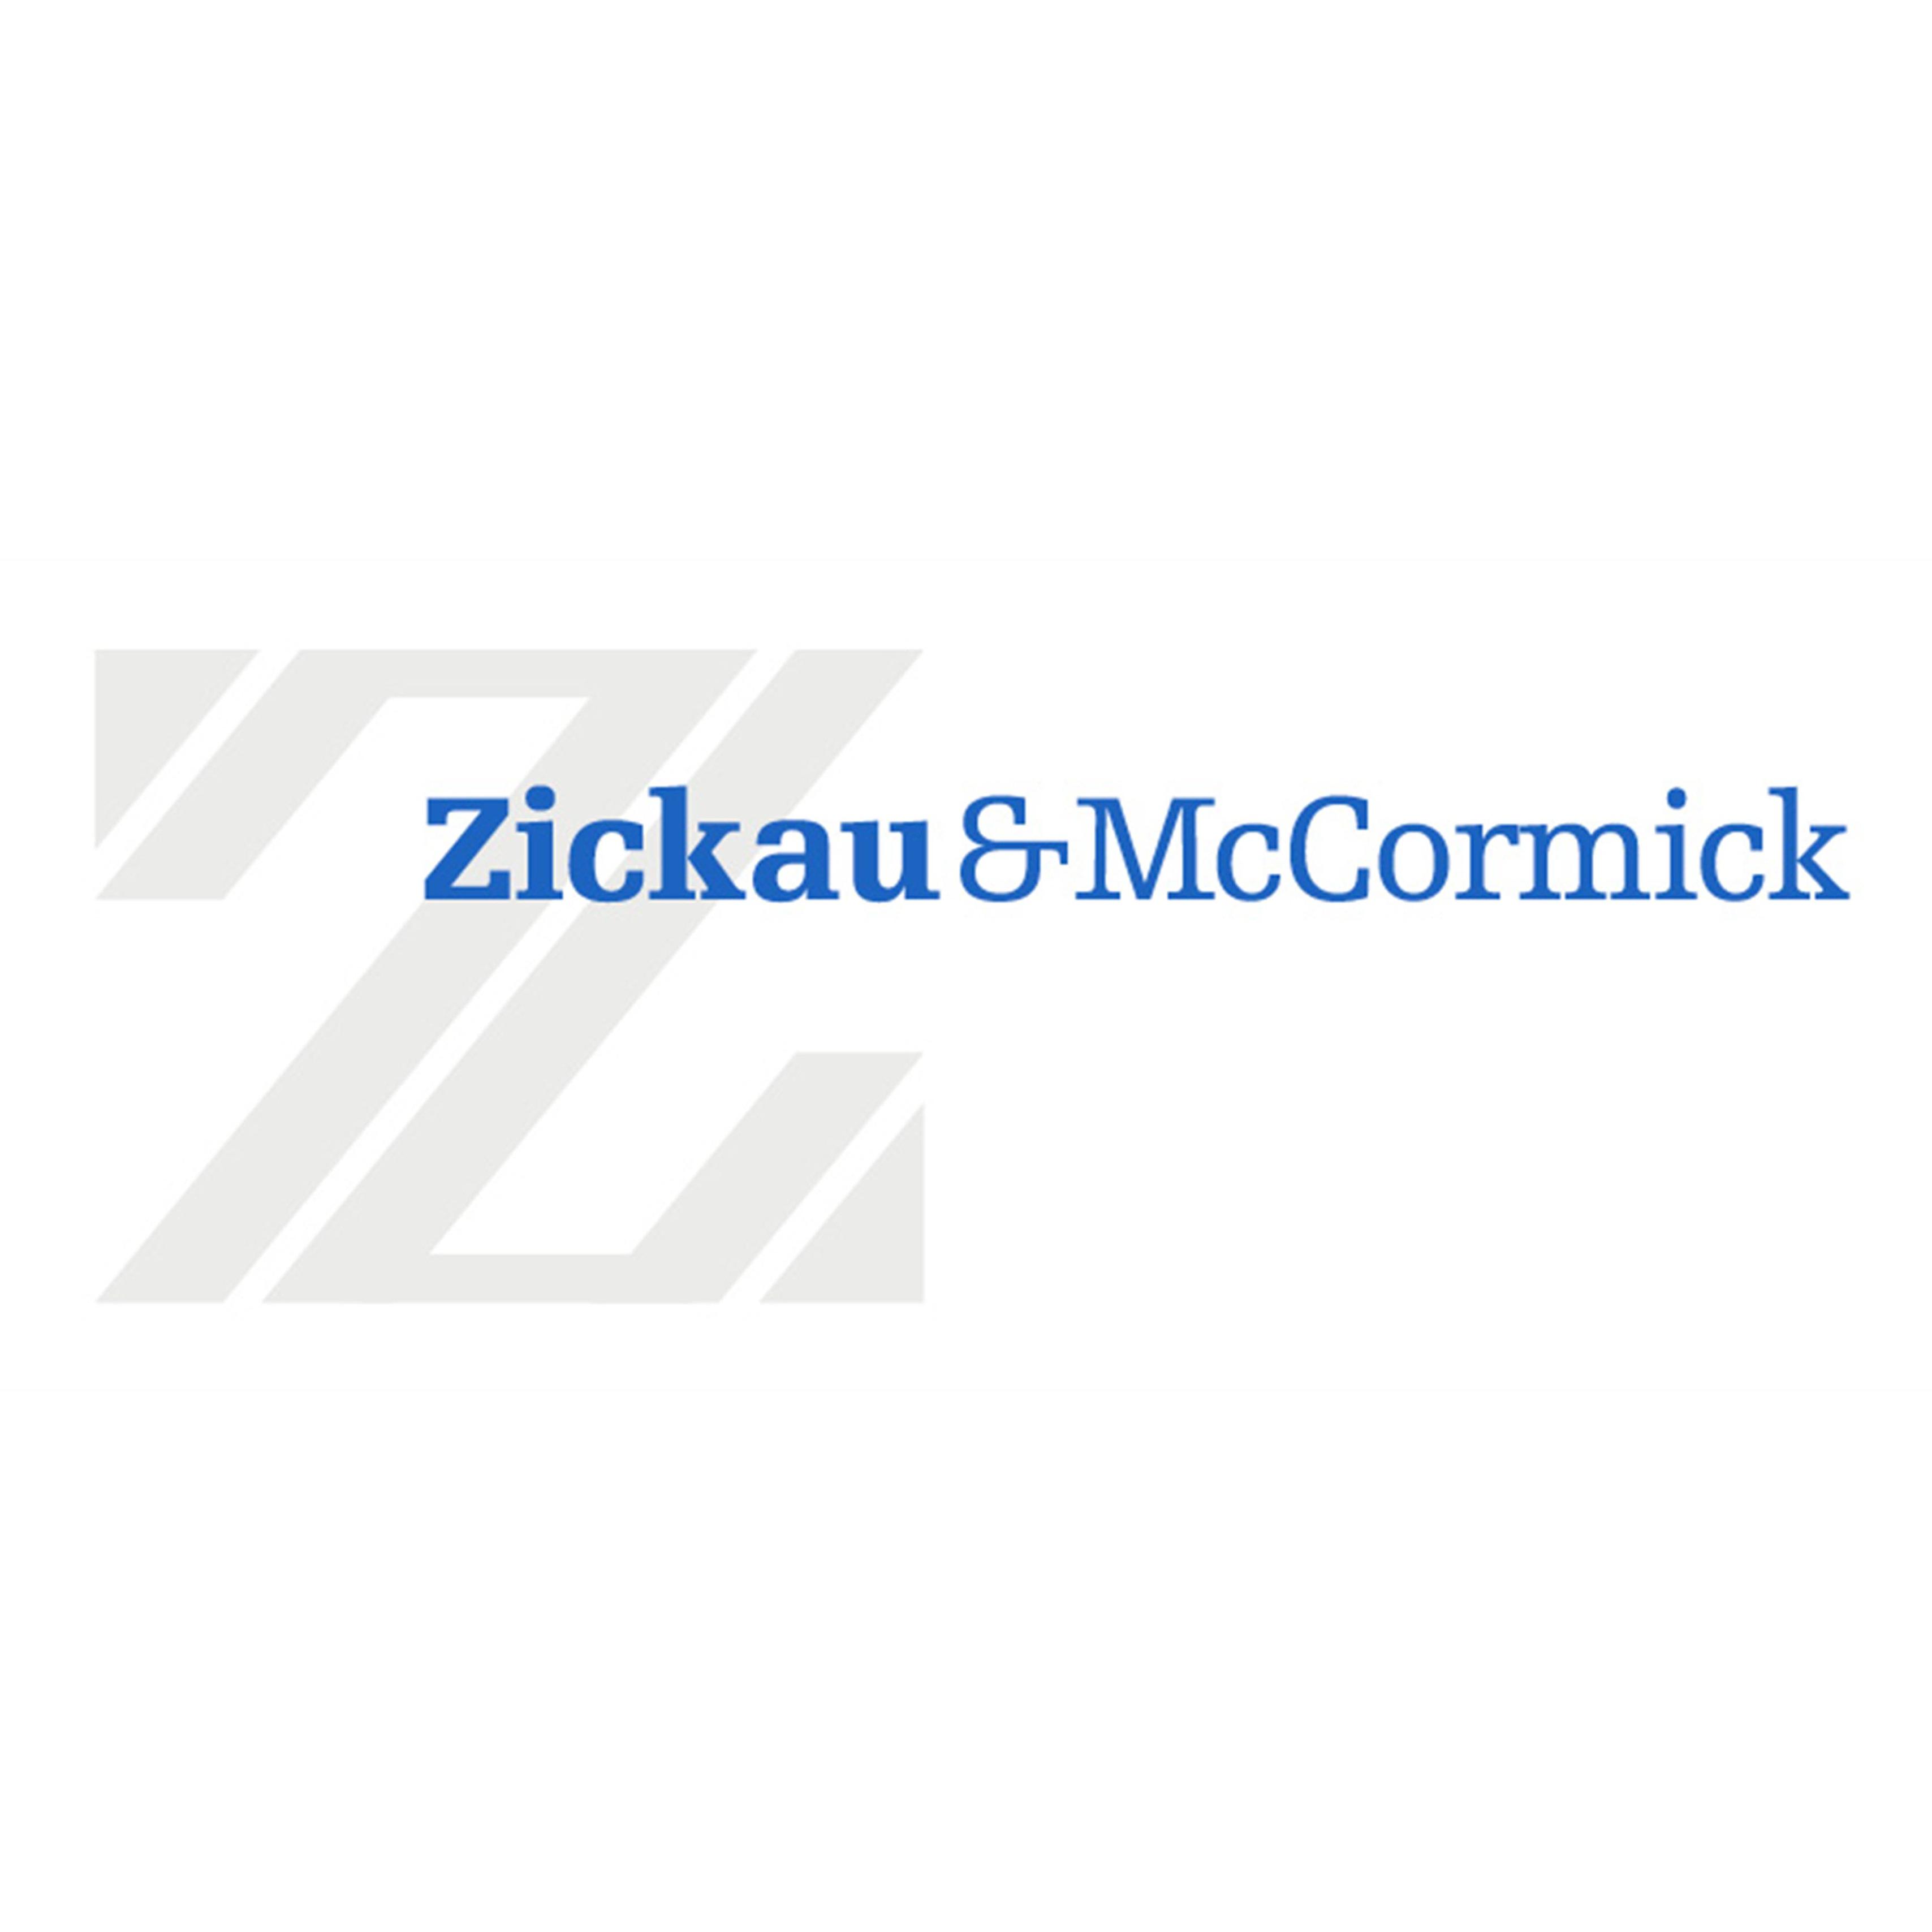 Zickau & McCormick LLC